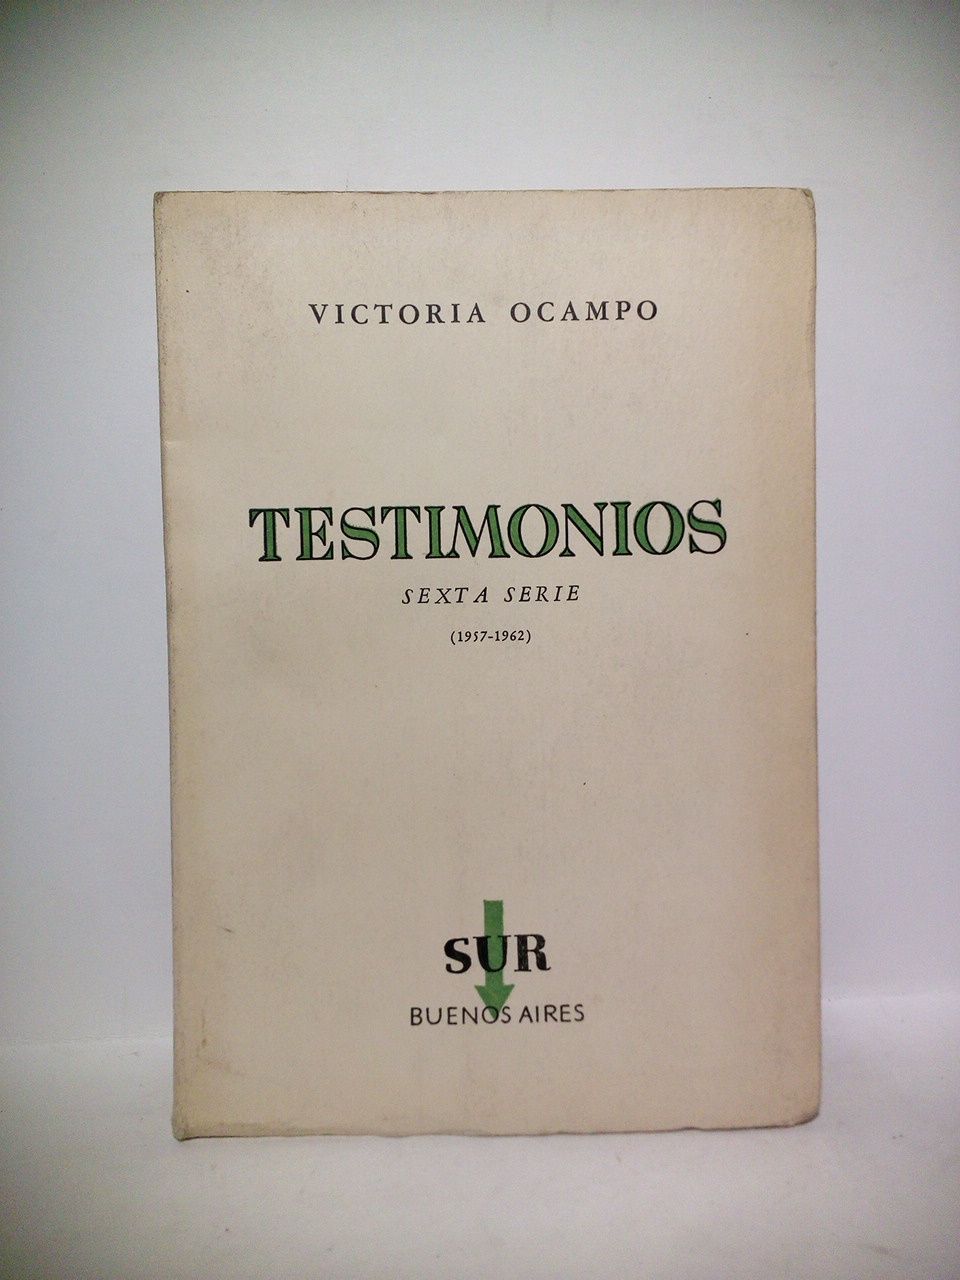 OCAMPO, Victoria - Testimonios (1957-1962): Sexta serie